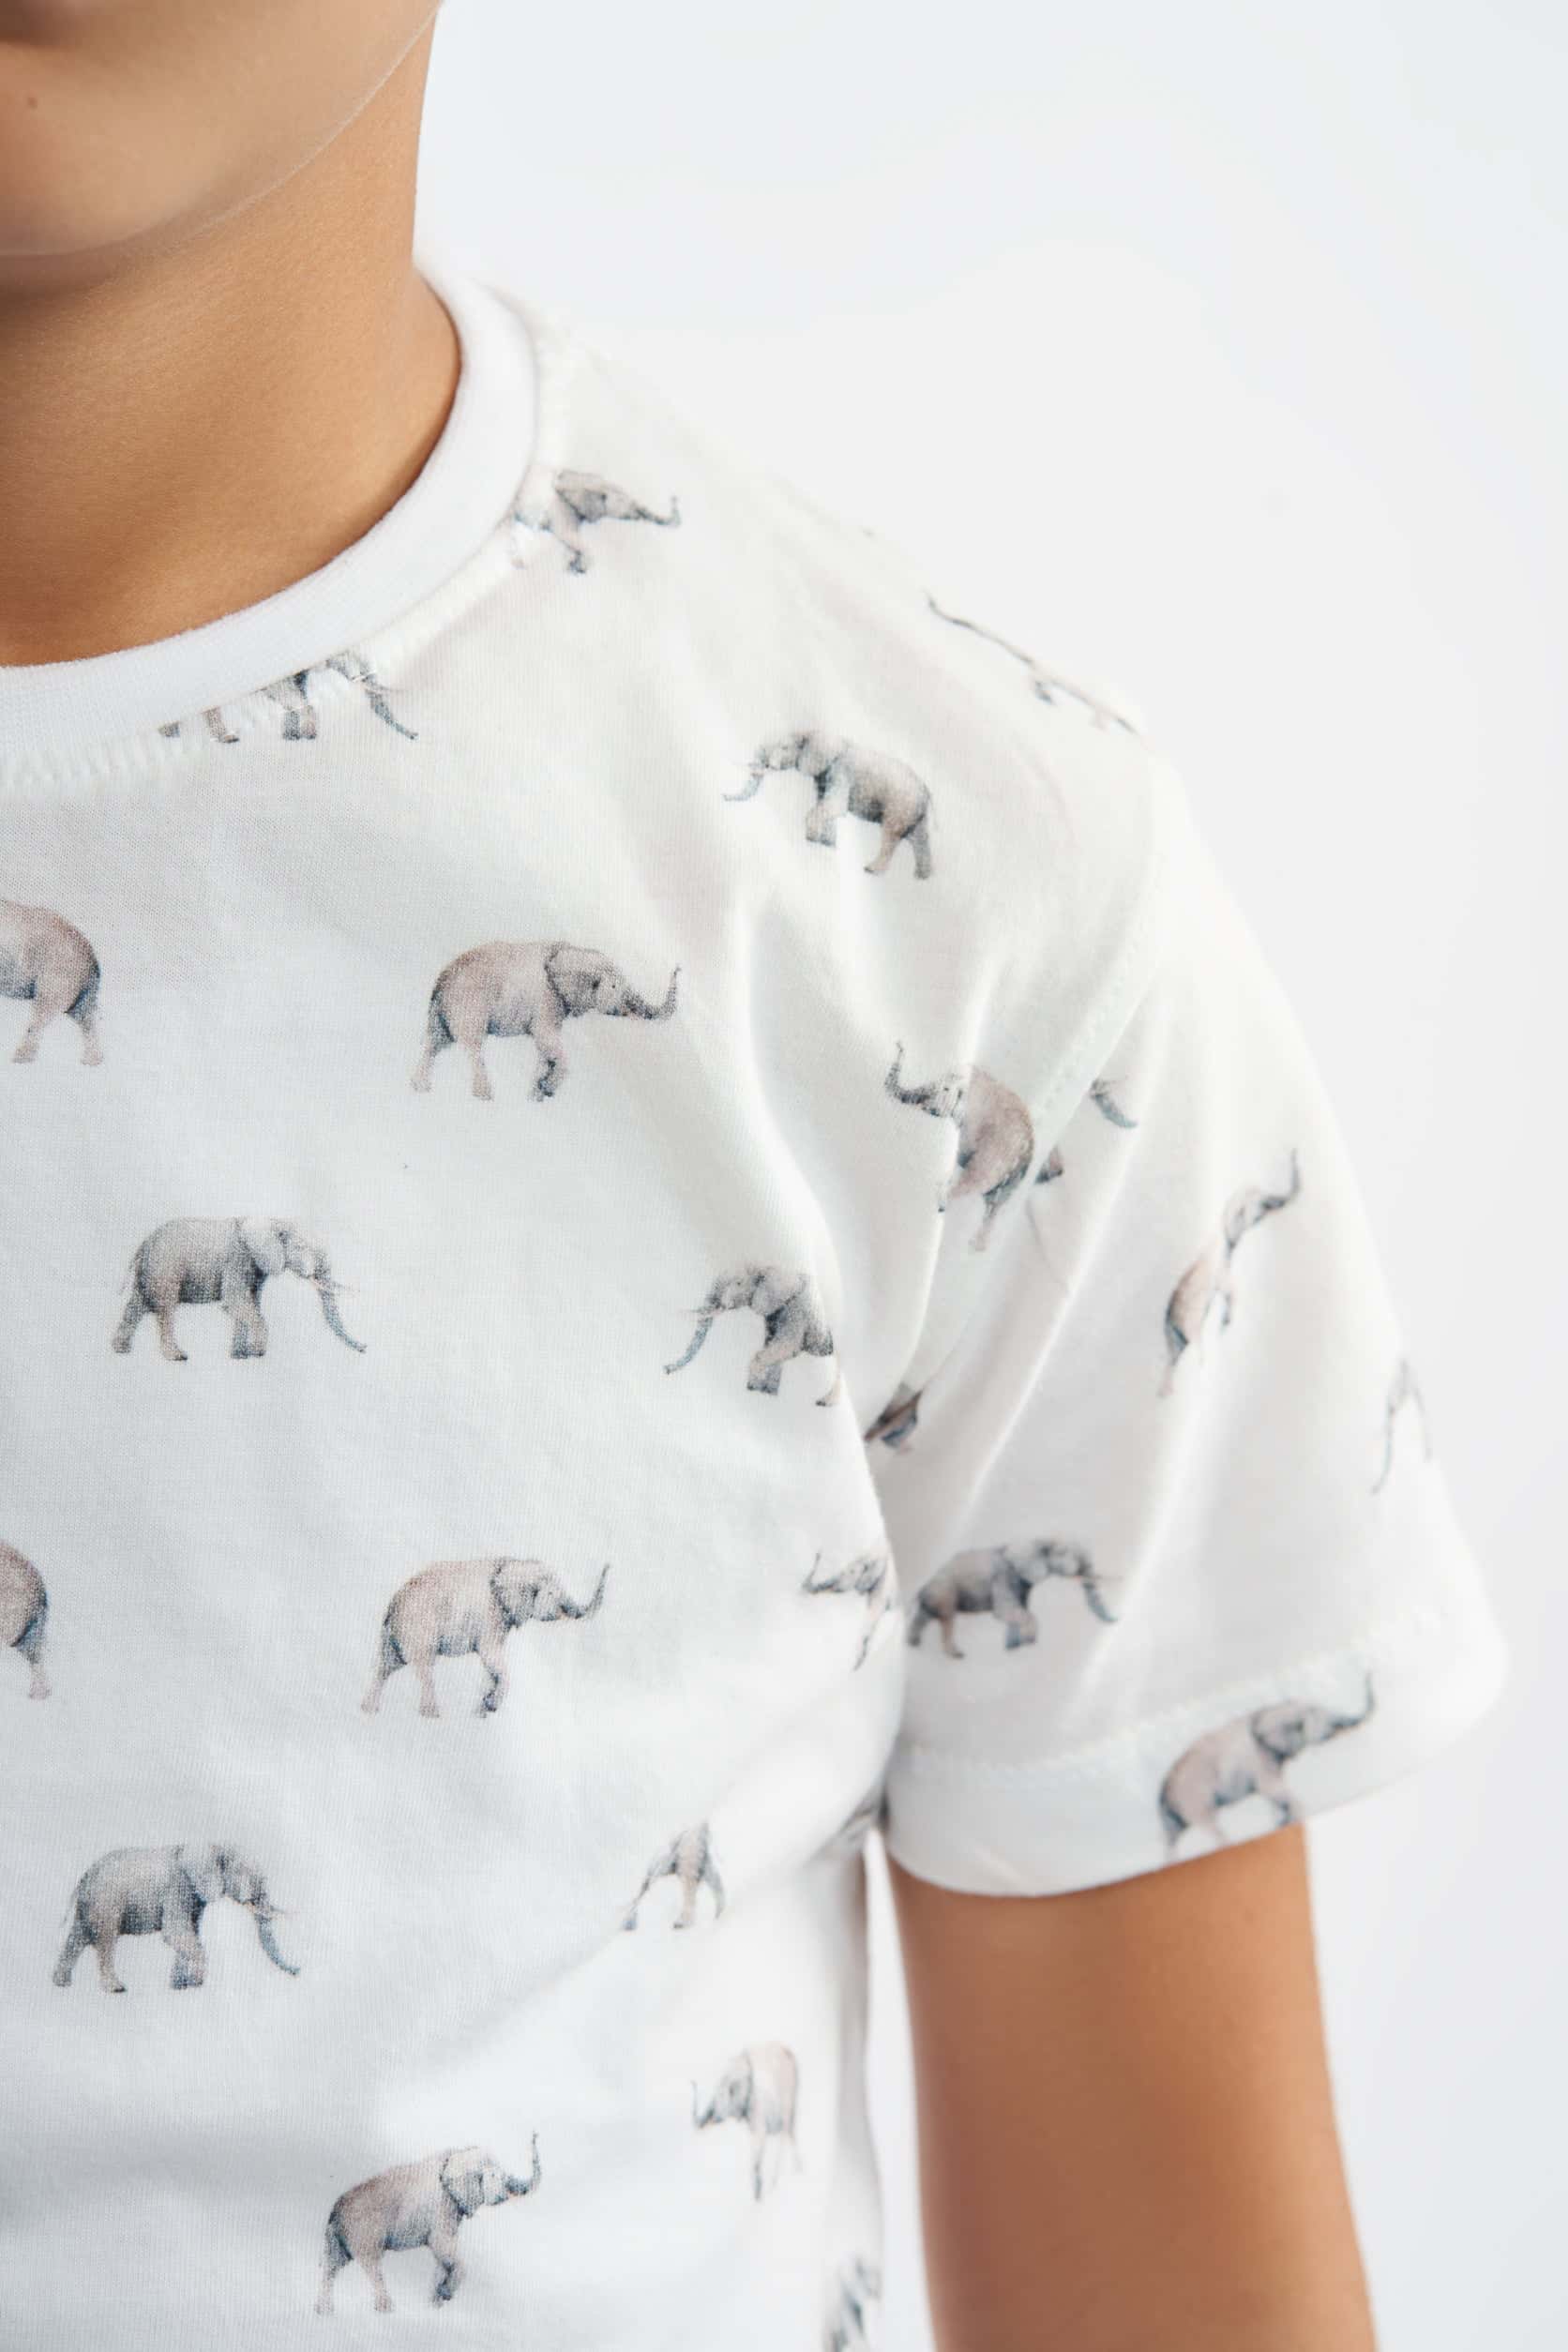 Boys Elephant Print Black Top & Solid Short Pajamas(31)